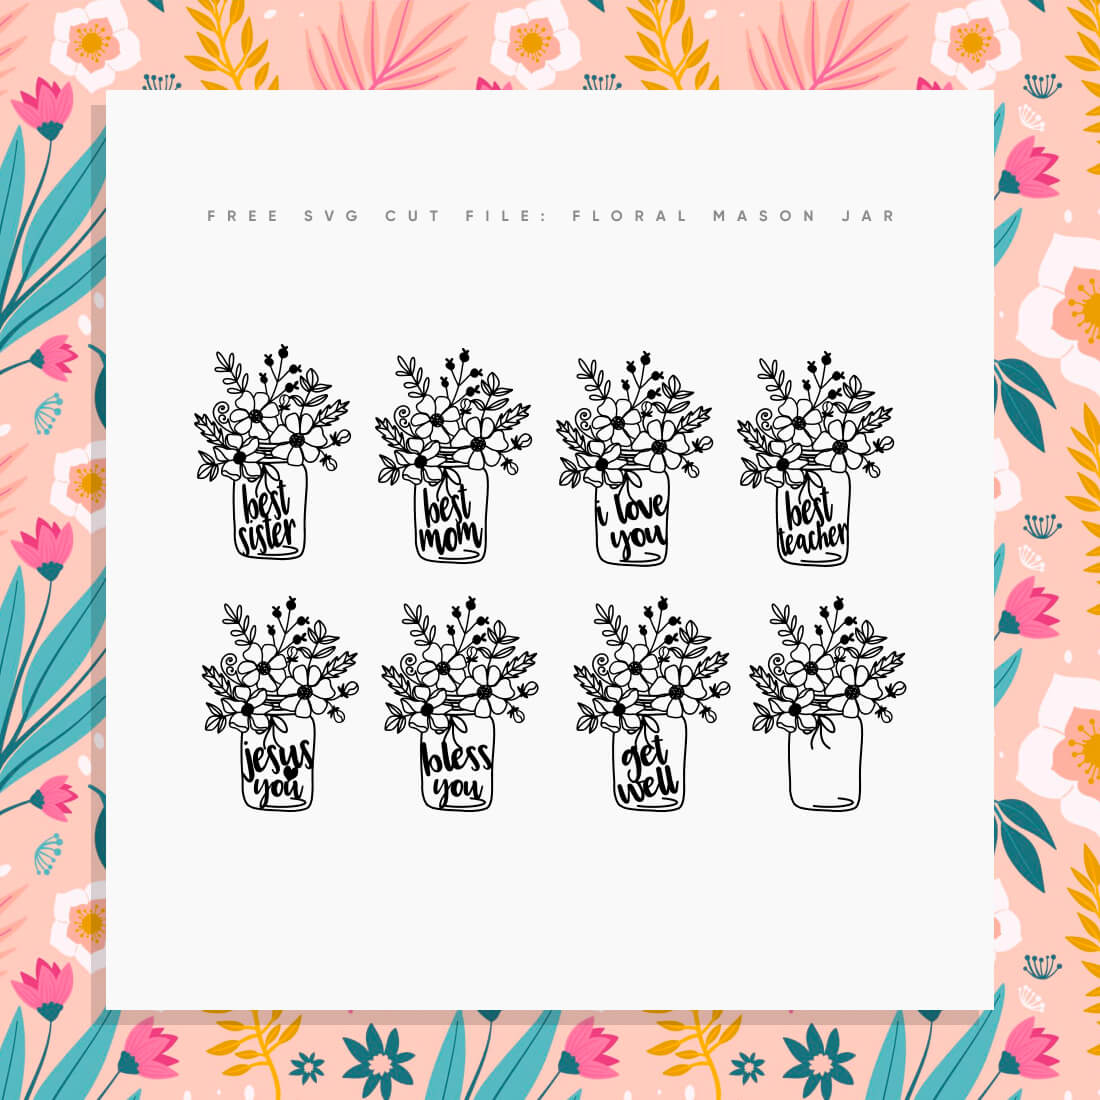 FREE SVG Cut File: Floral Mason Jar previews.